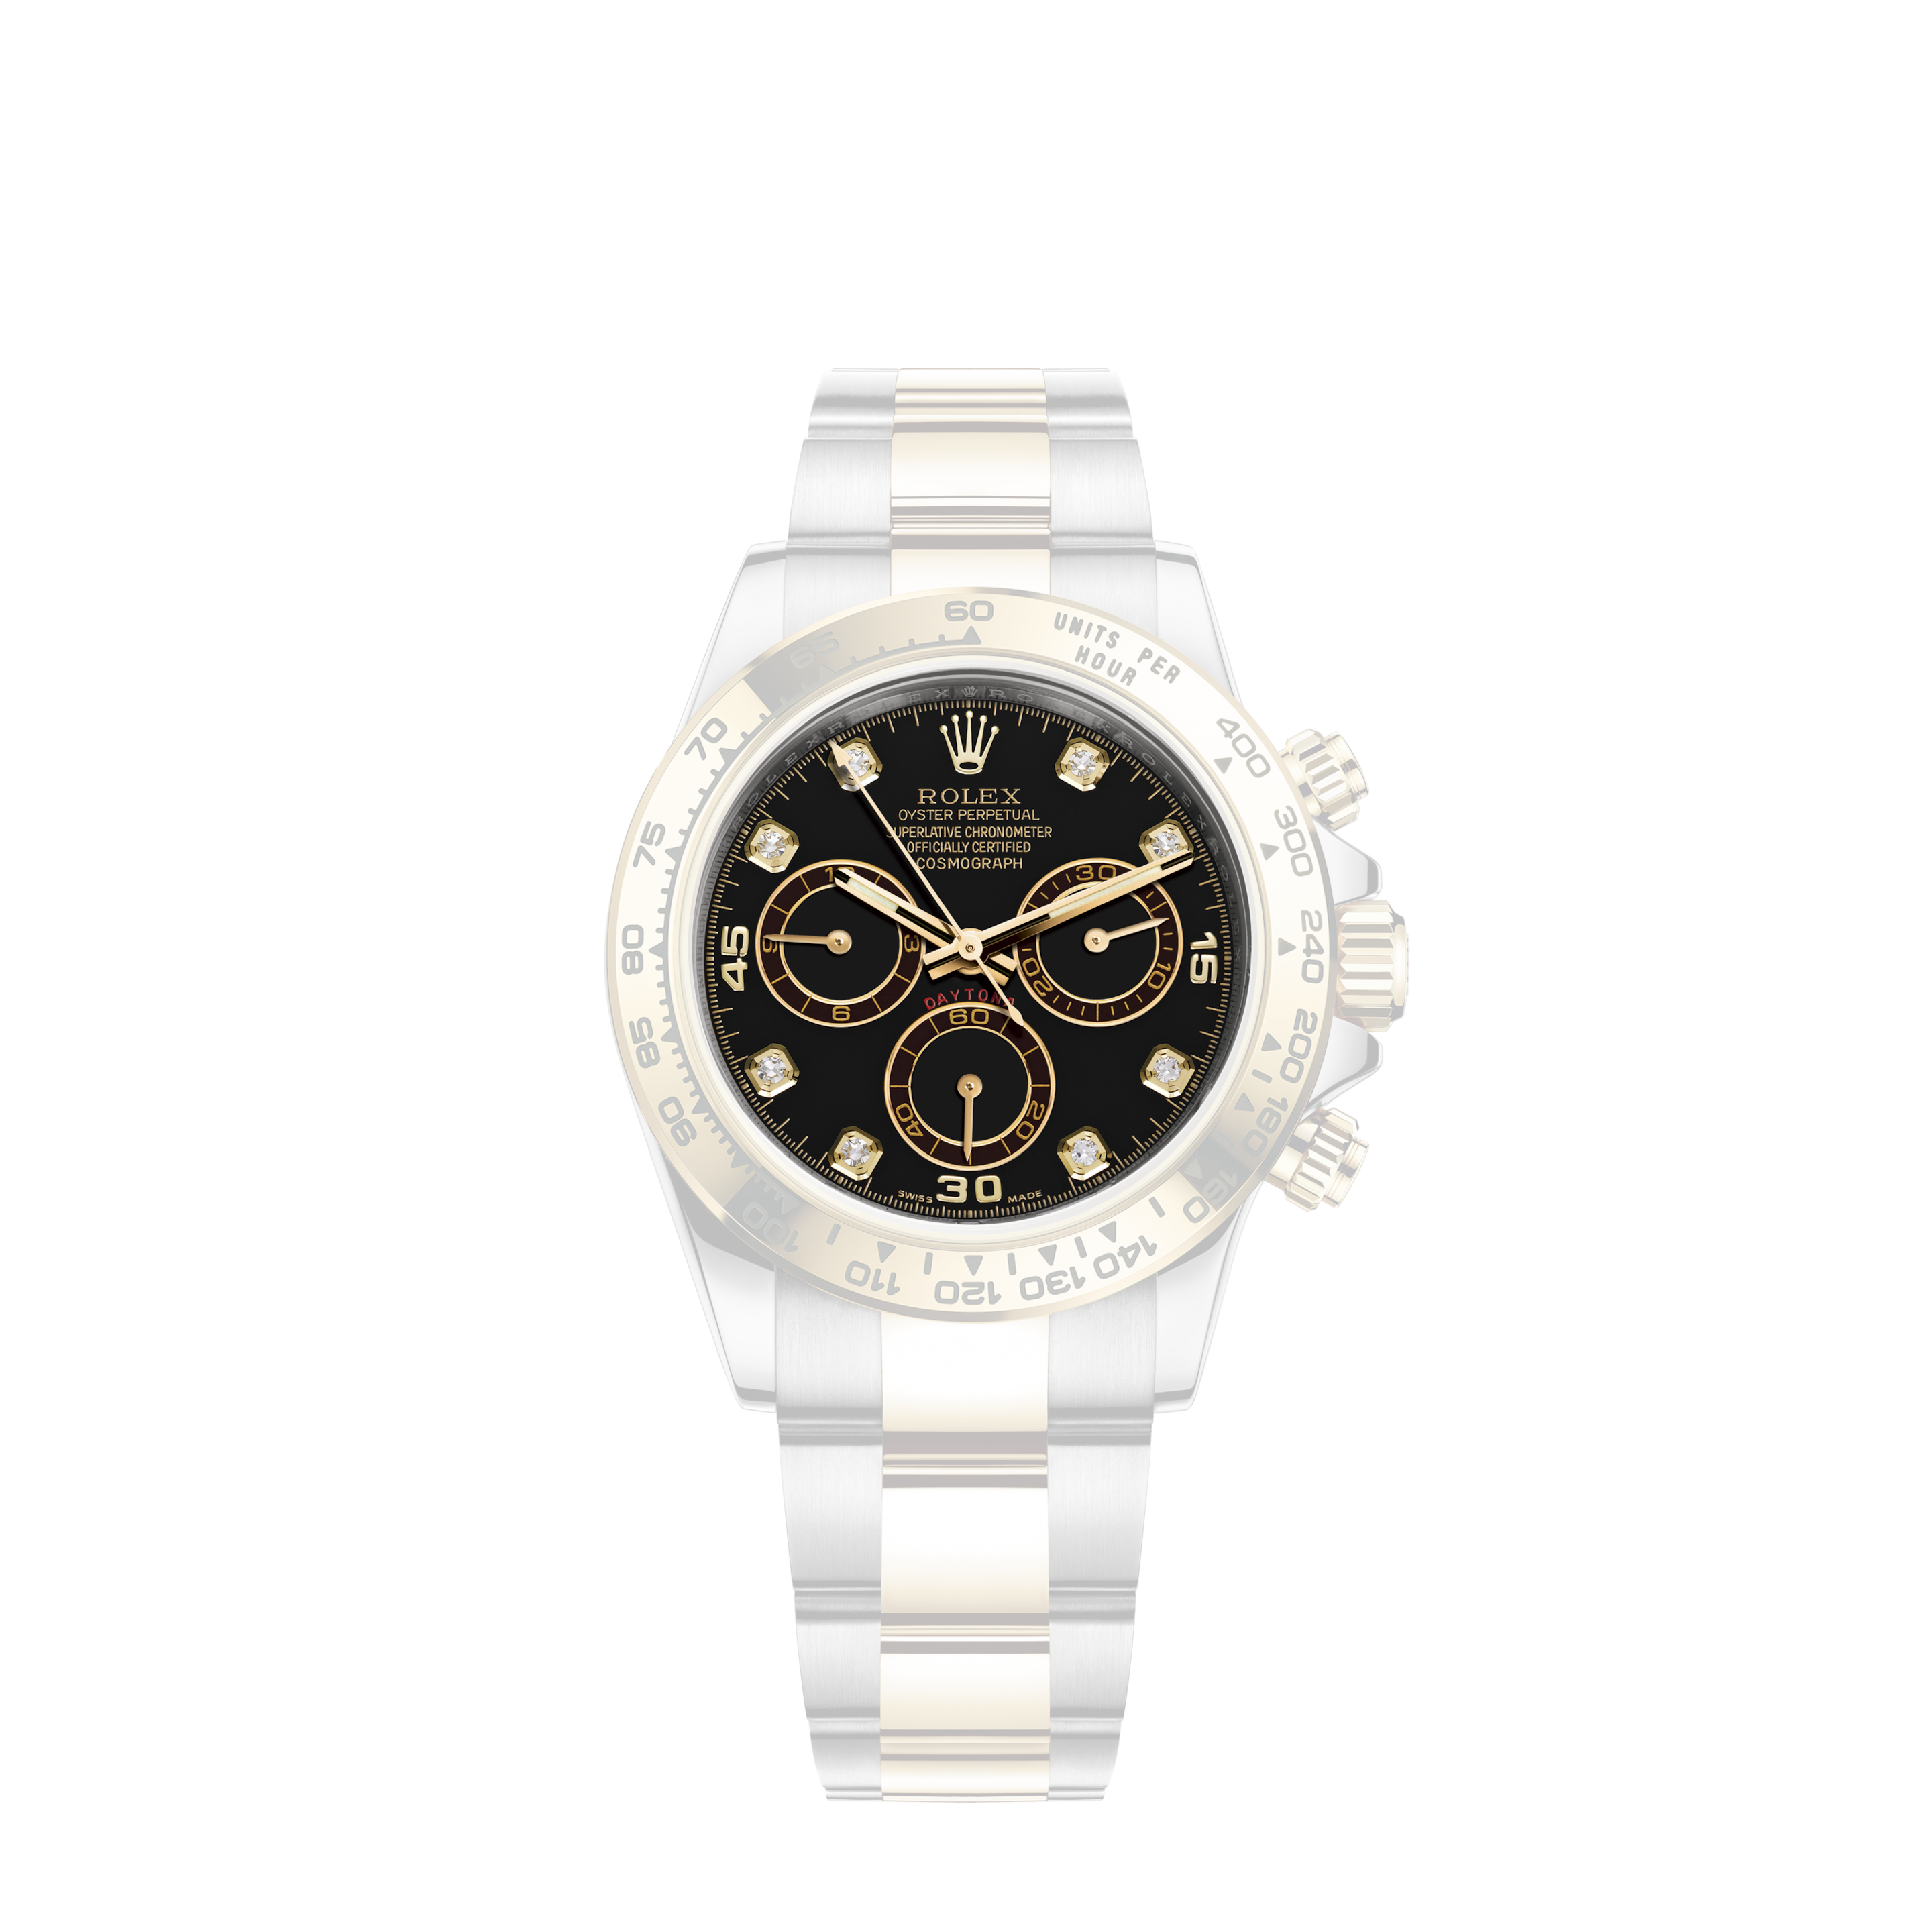 Rolex 2016 Datejust 36, 116200, Black Baton Dial, Oyster Bracelet, Box & Papers